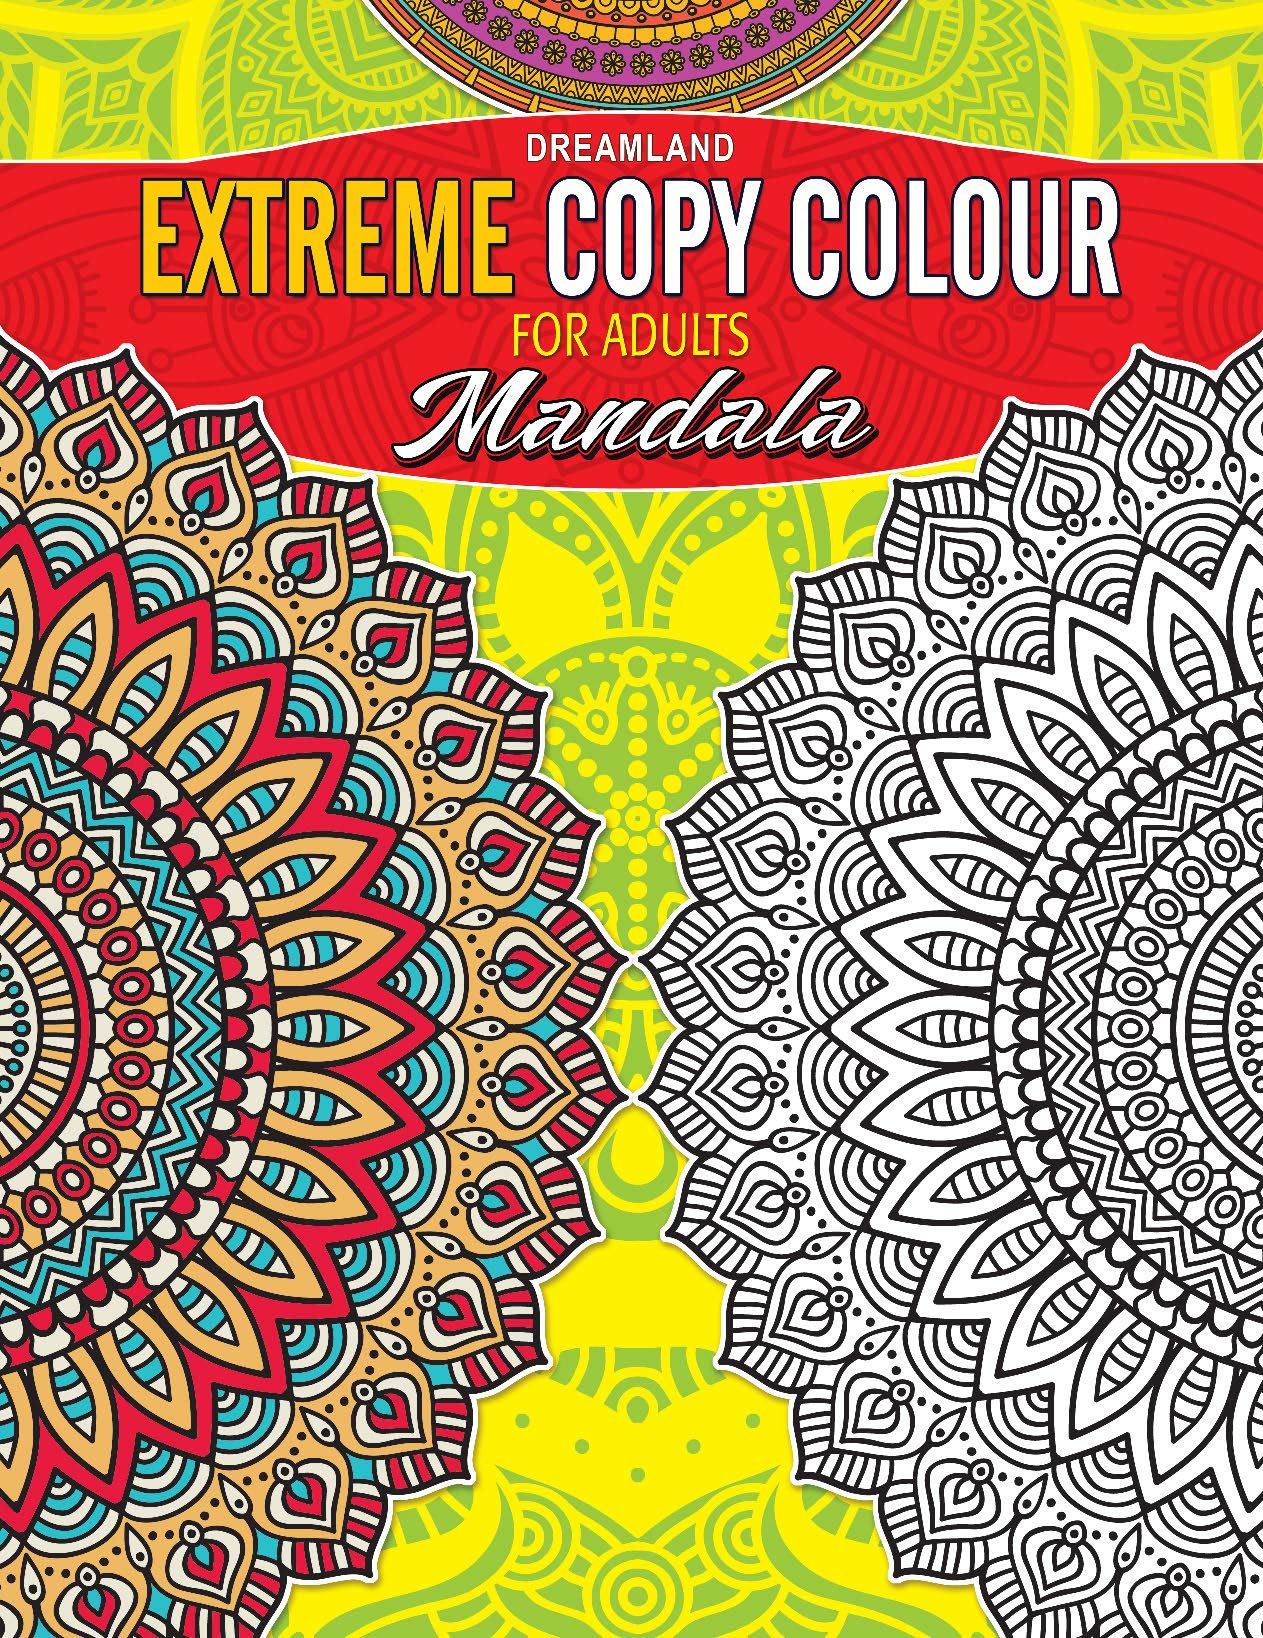 Extreme Copy Colour - Mandala